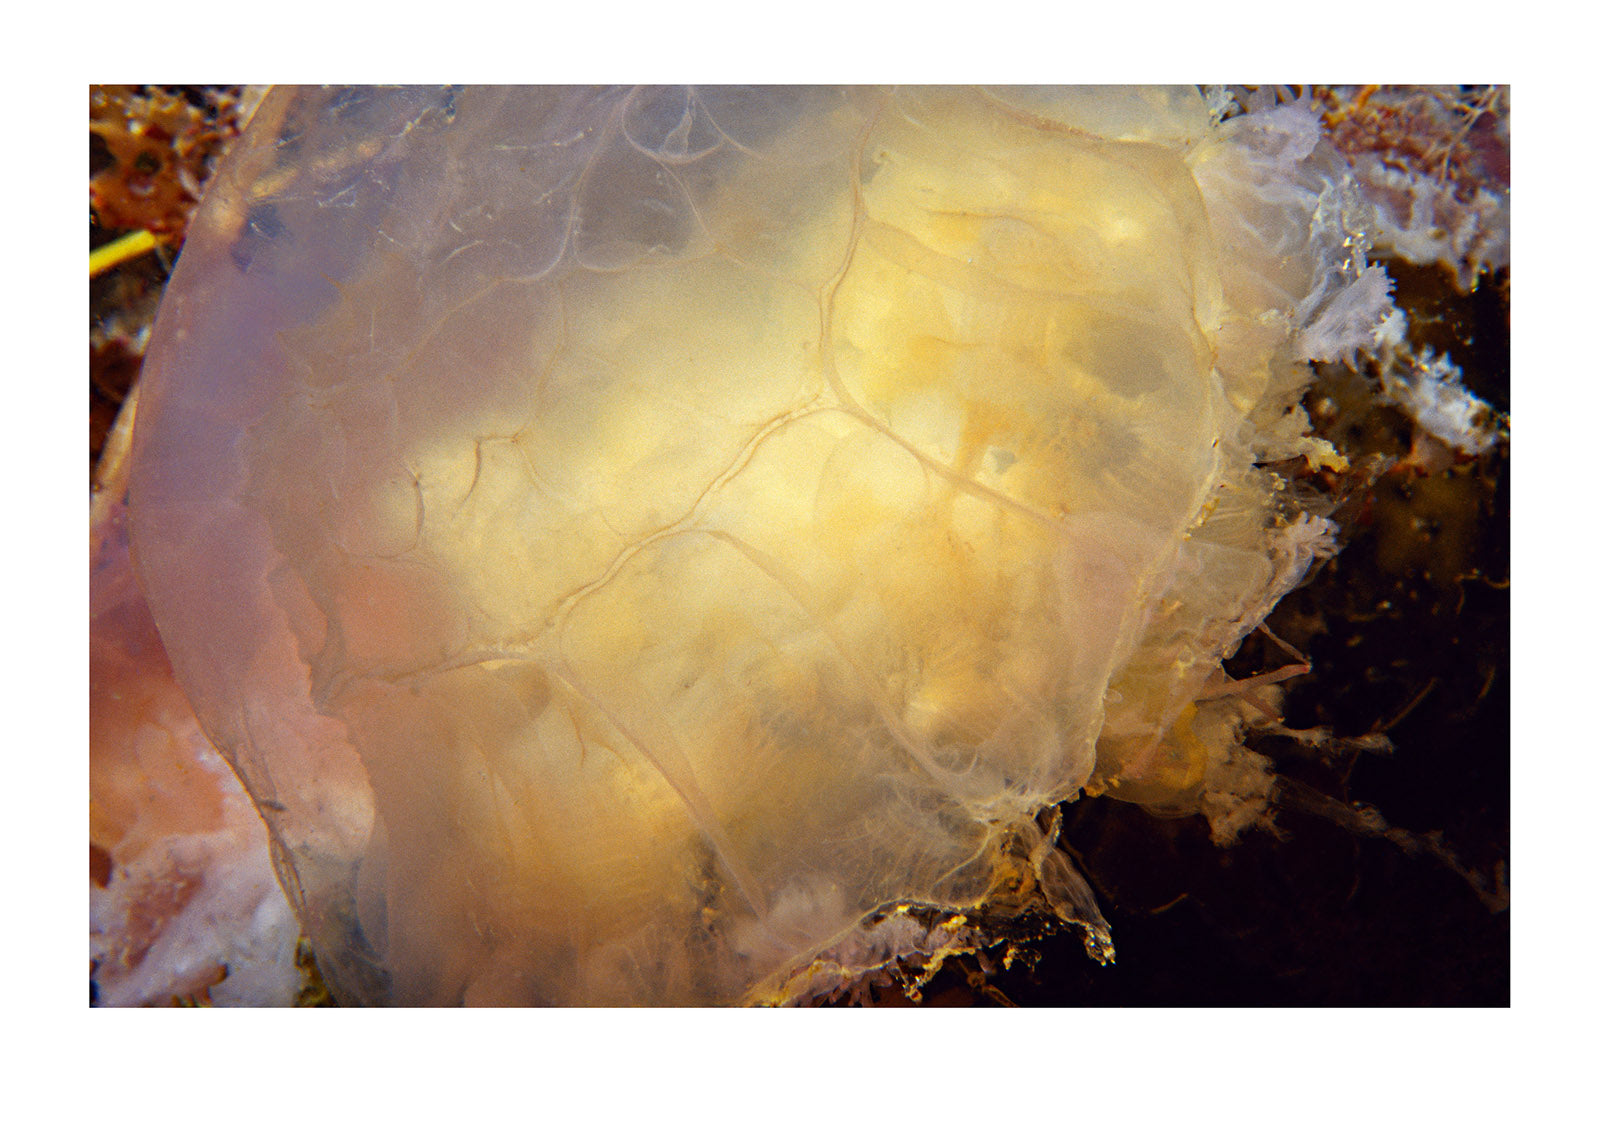 A delicate, bell shaped Jellyfish floating near the ocean floor. Merimbula, New South Wales, Australia.